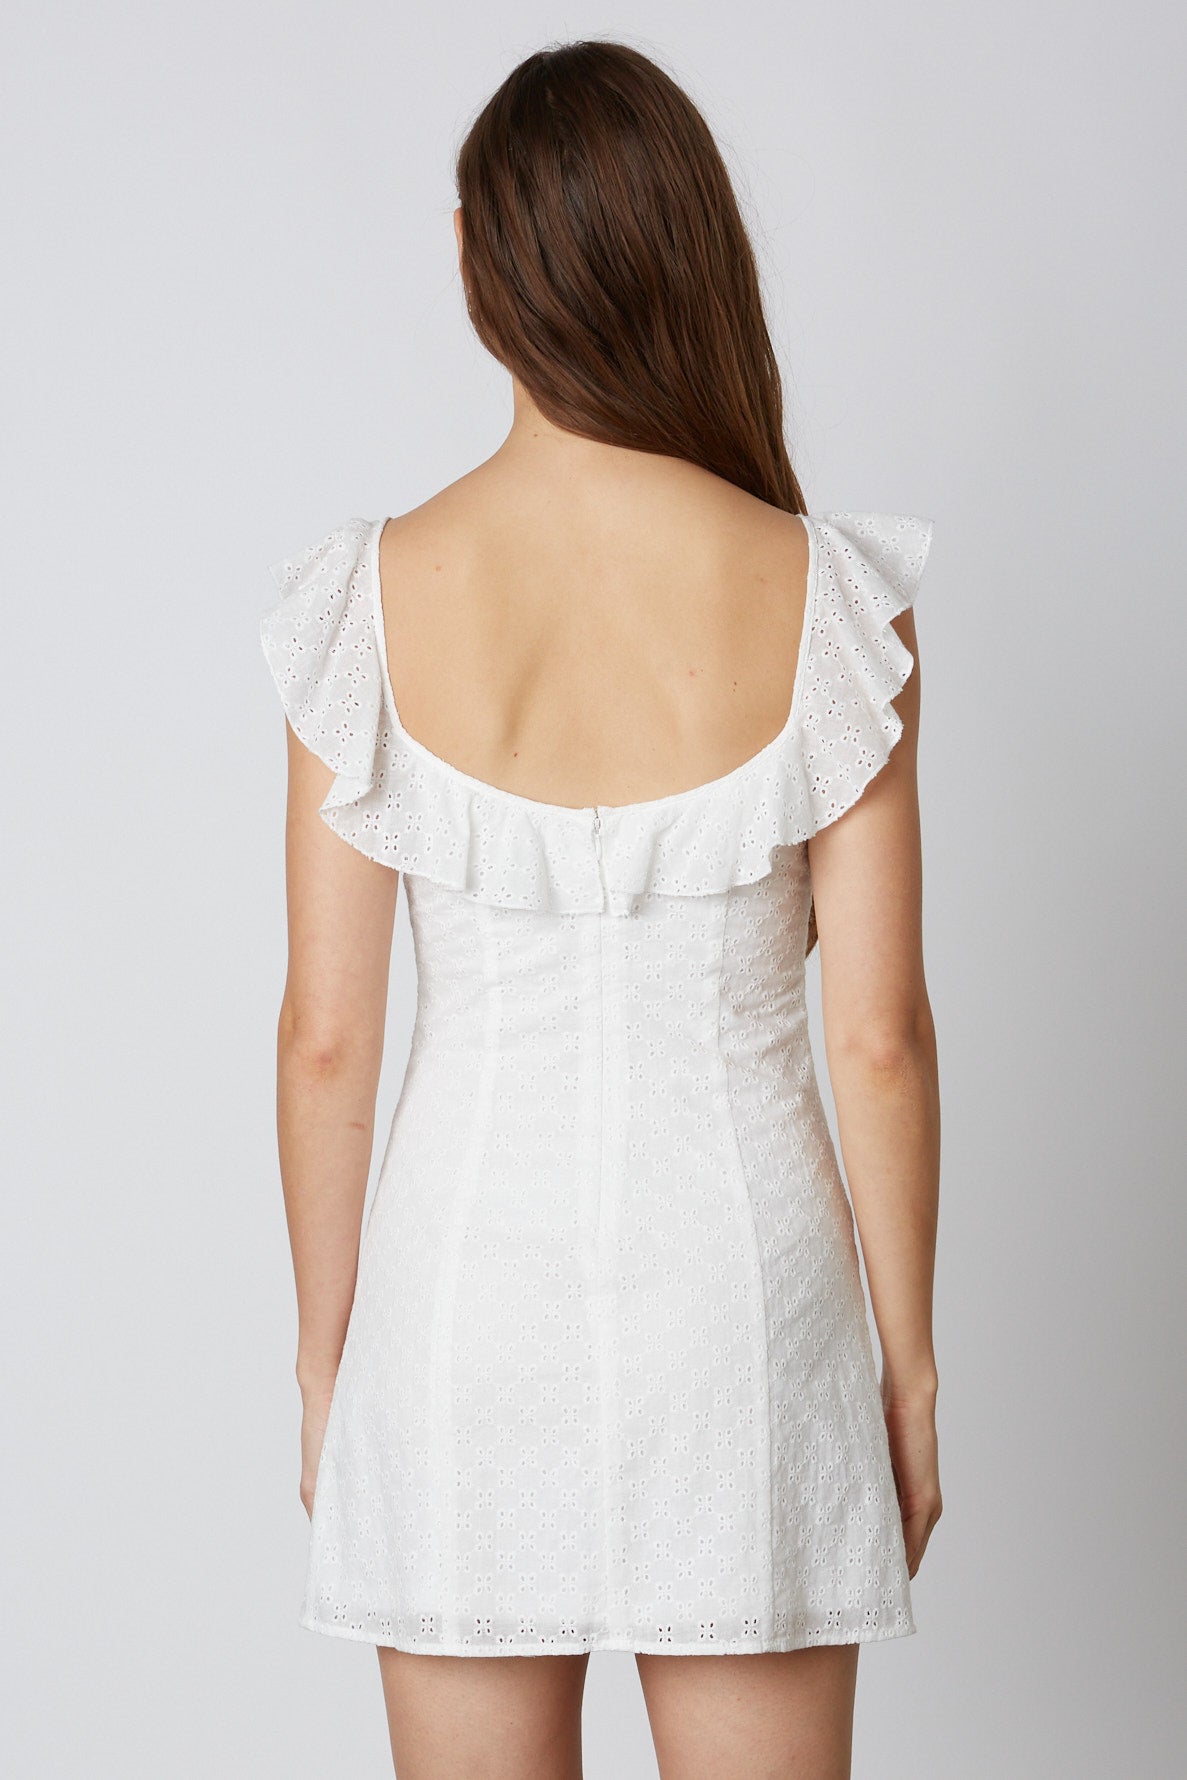 Eyelet Mini Dress in White Back View